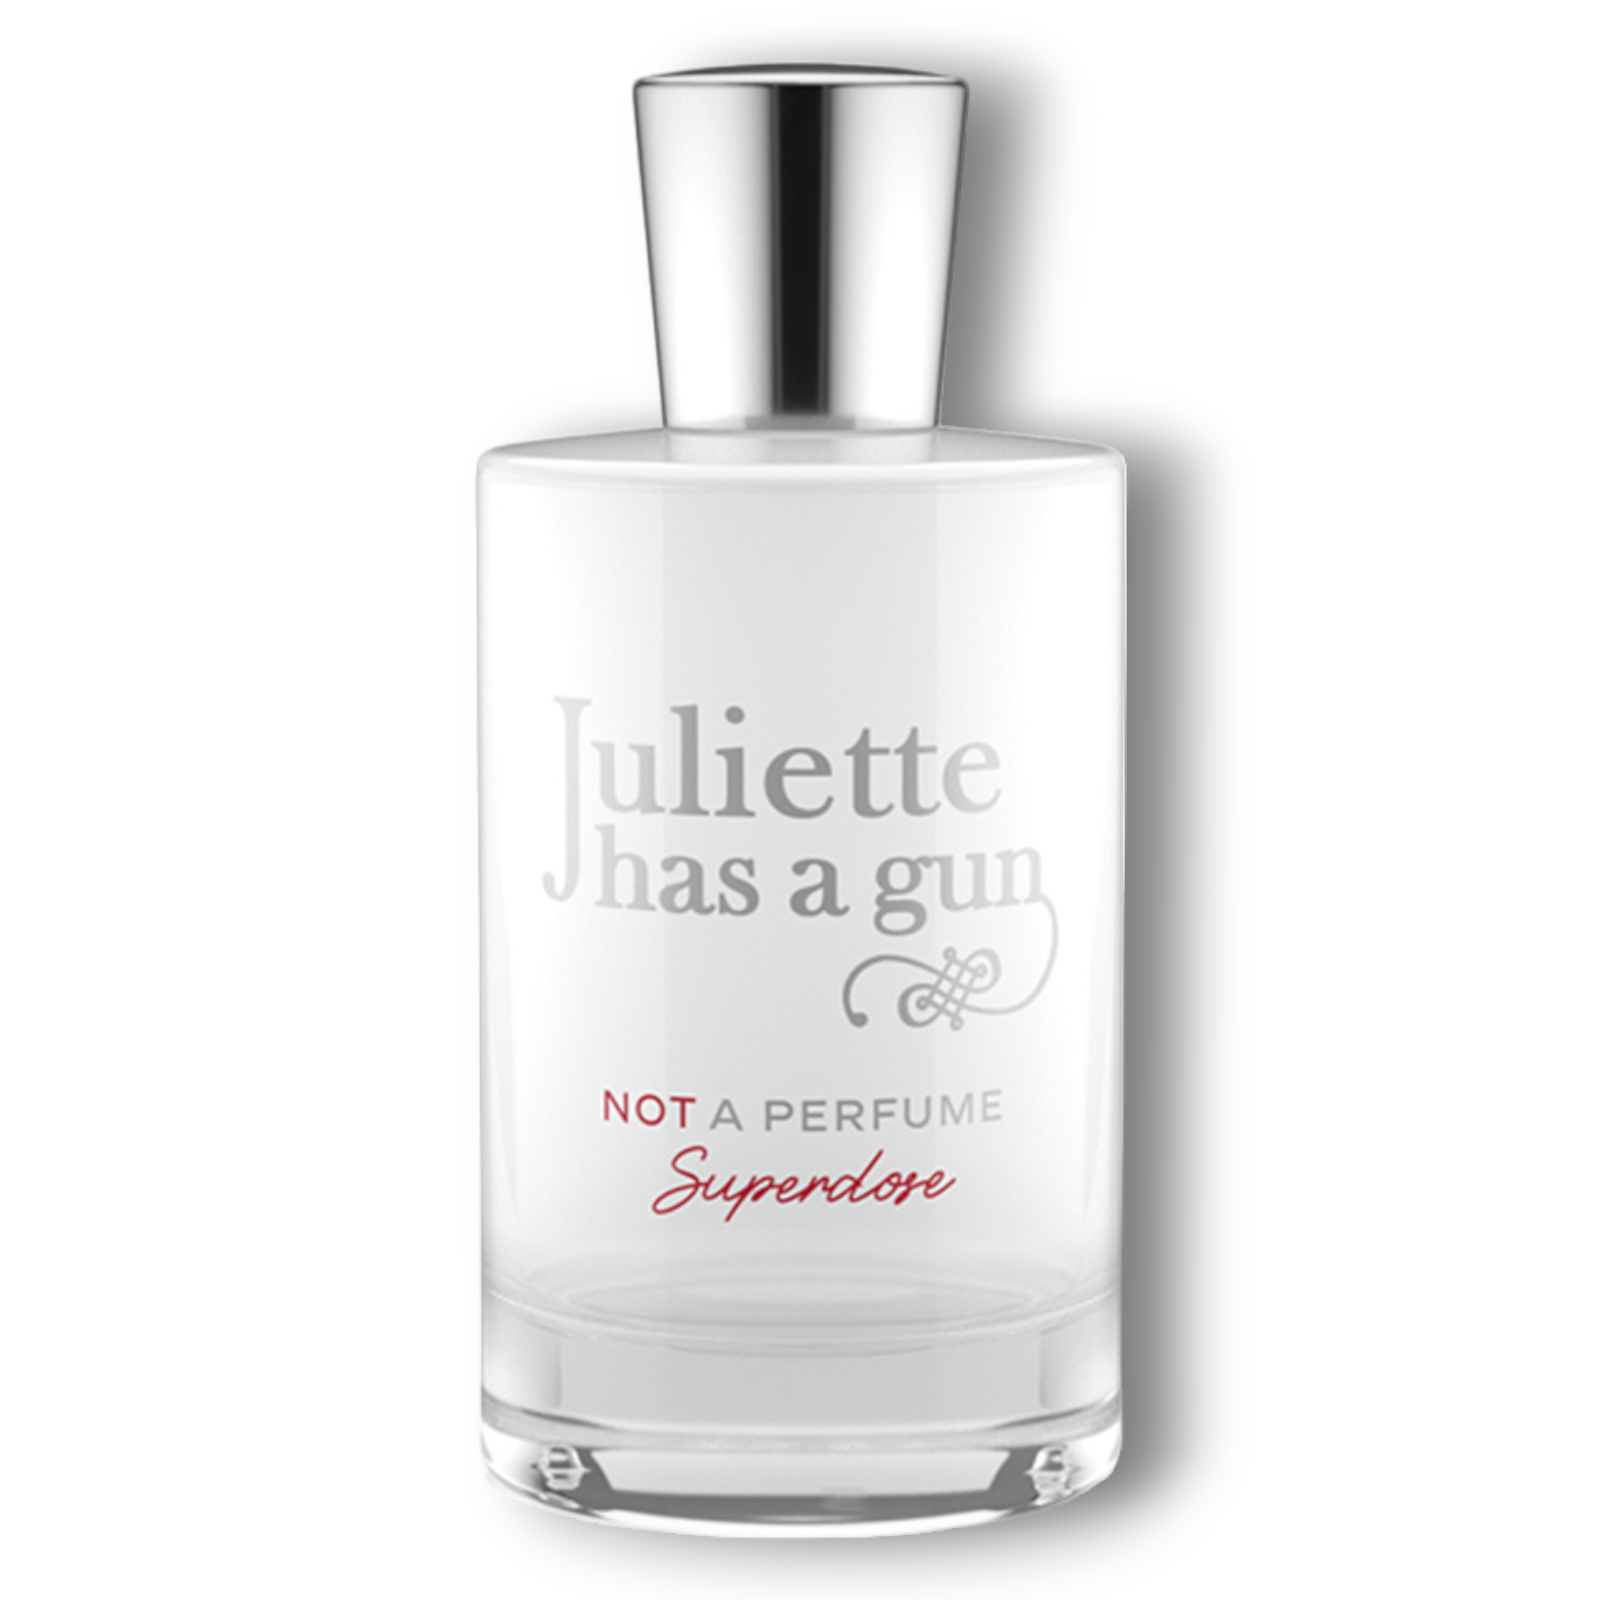 Not A Perfume Superdose Juliette Has A Gun